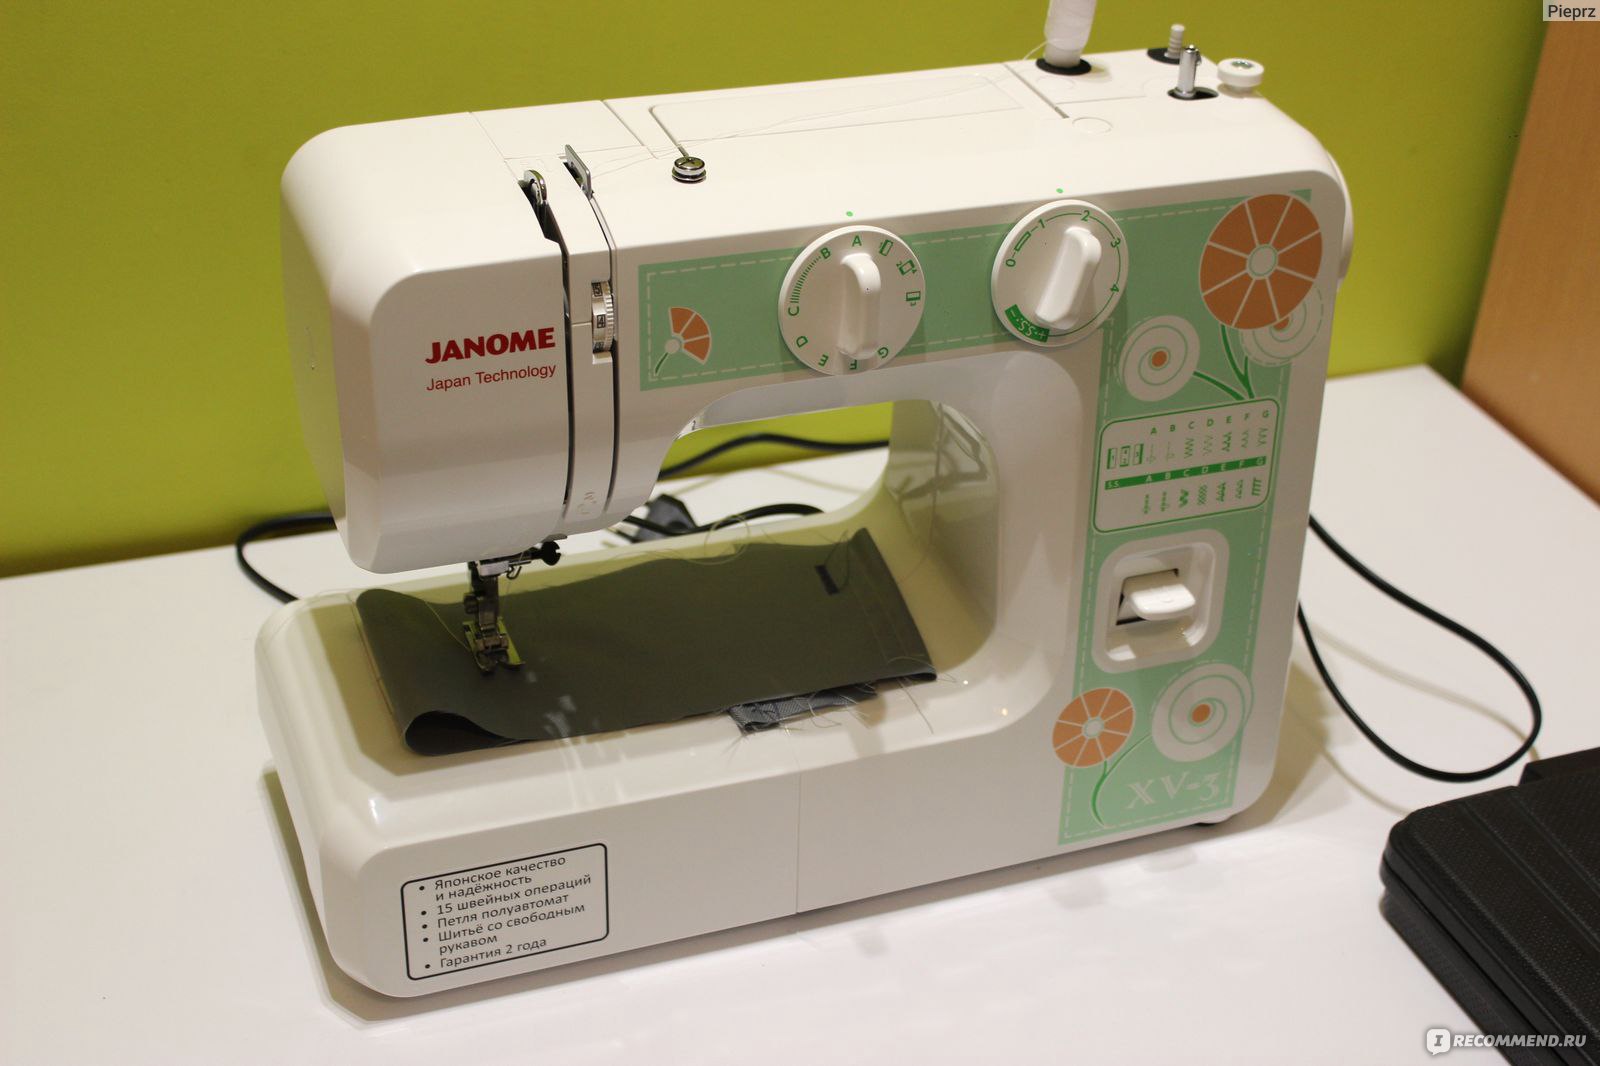 Швейная машинка janome 15. Швейная машинка Janome xv3. Janome XV-3. Janome XV-3 швейная машина. Janome Japan Technology швейная машинка.